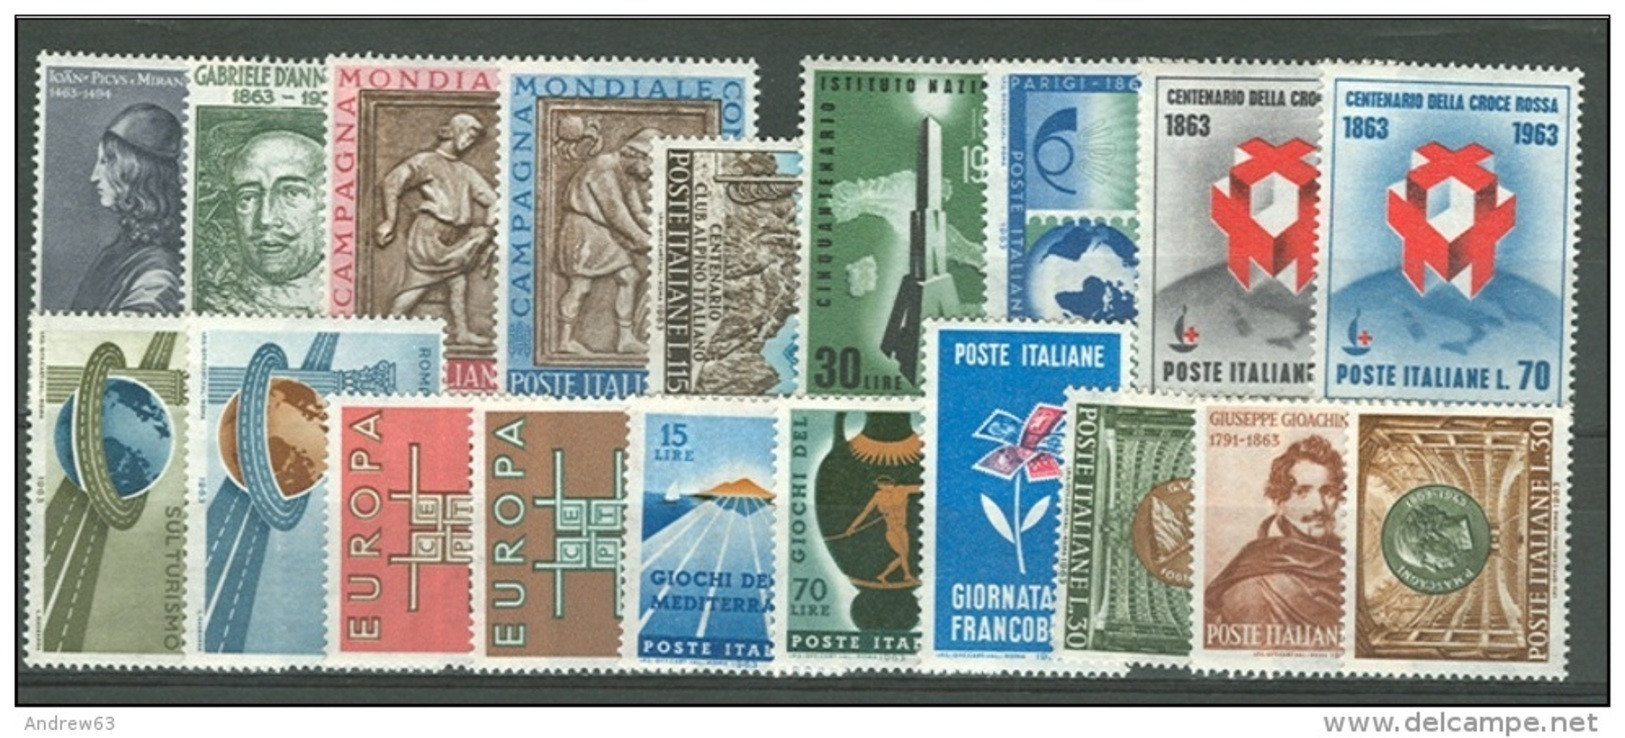 ITALIA REPUBBLICA - 1963 - Annata Completa - 19 Valori - Complete Year - ** MNH/VF - Volledige Jaargang